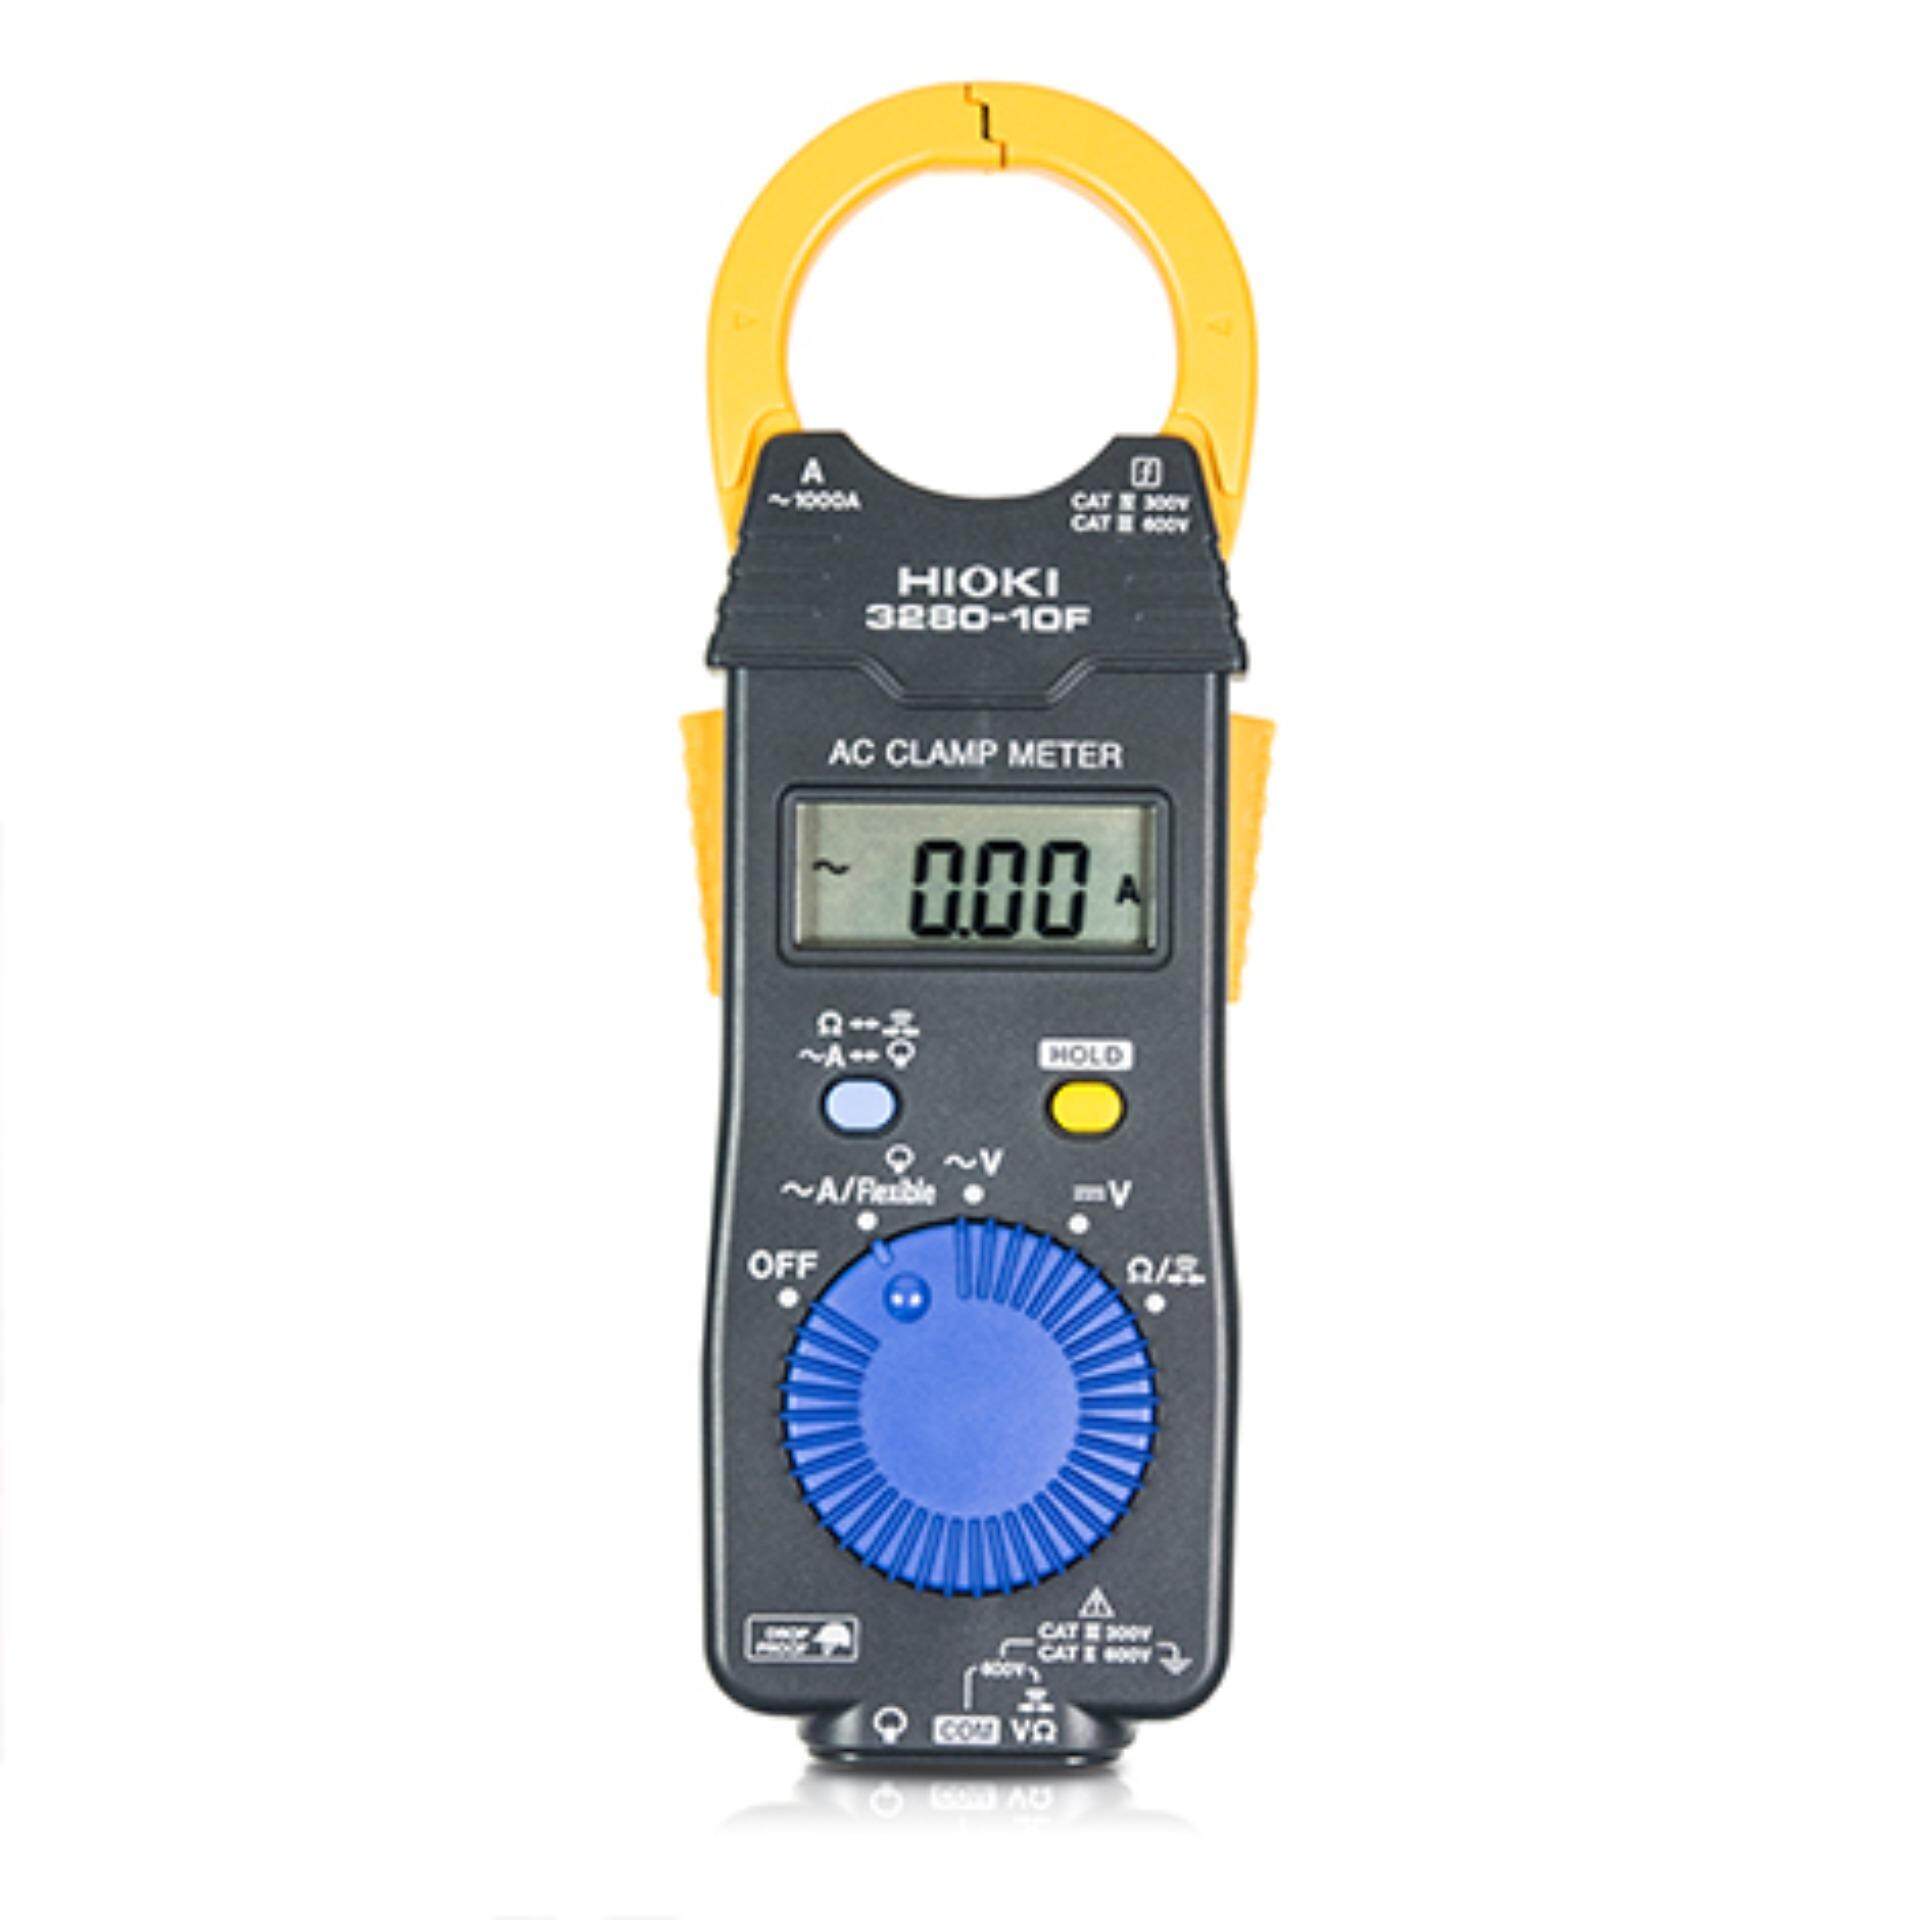 3280 -10F - HIOKI - Digital Clamp Meter ดิจิตอล แคลมป์มิเตอร์  มิเตอร์วัดไฟ AC Current, AC/DC Voltage (MEAN Value) - จำหน่ายโดย Factomart.com